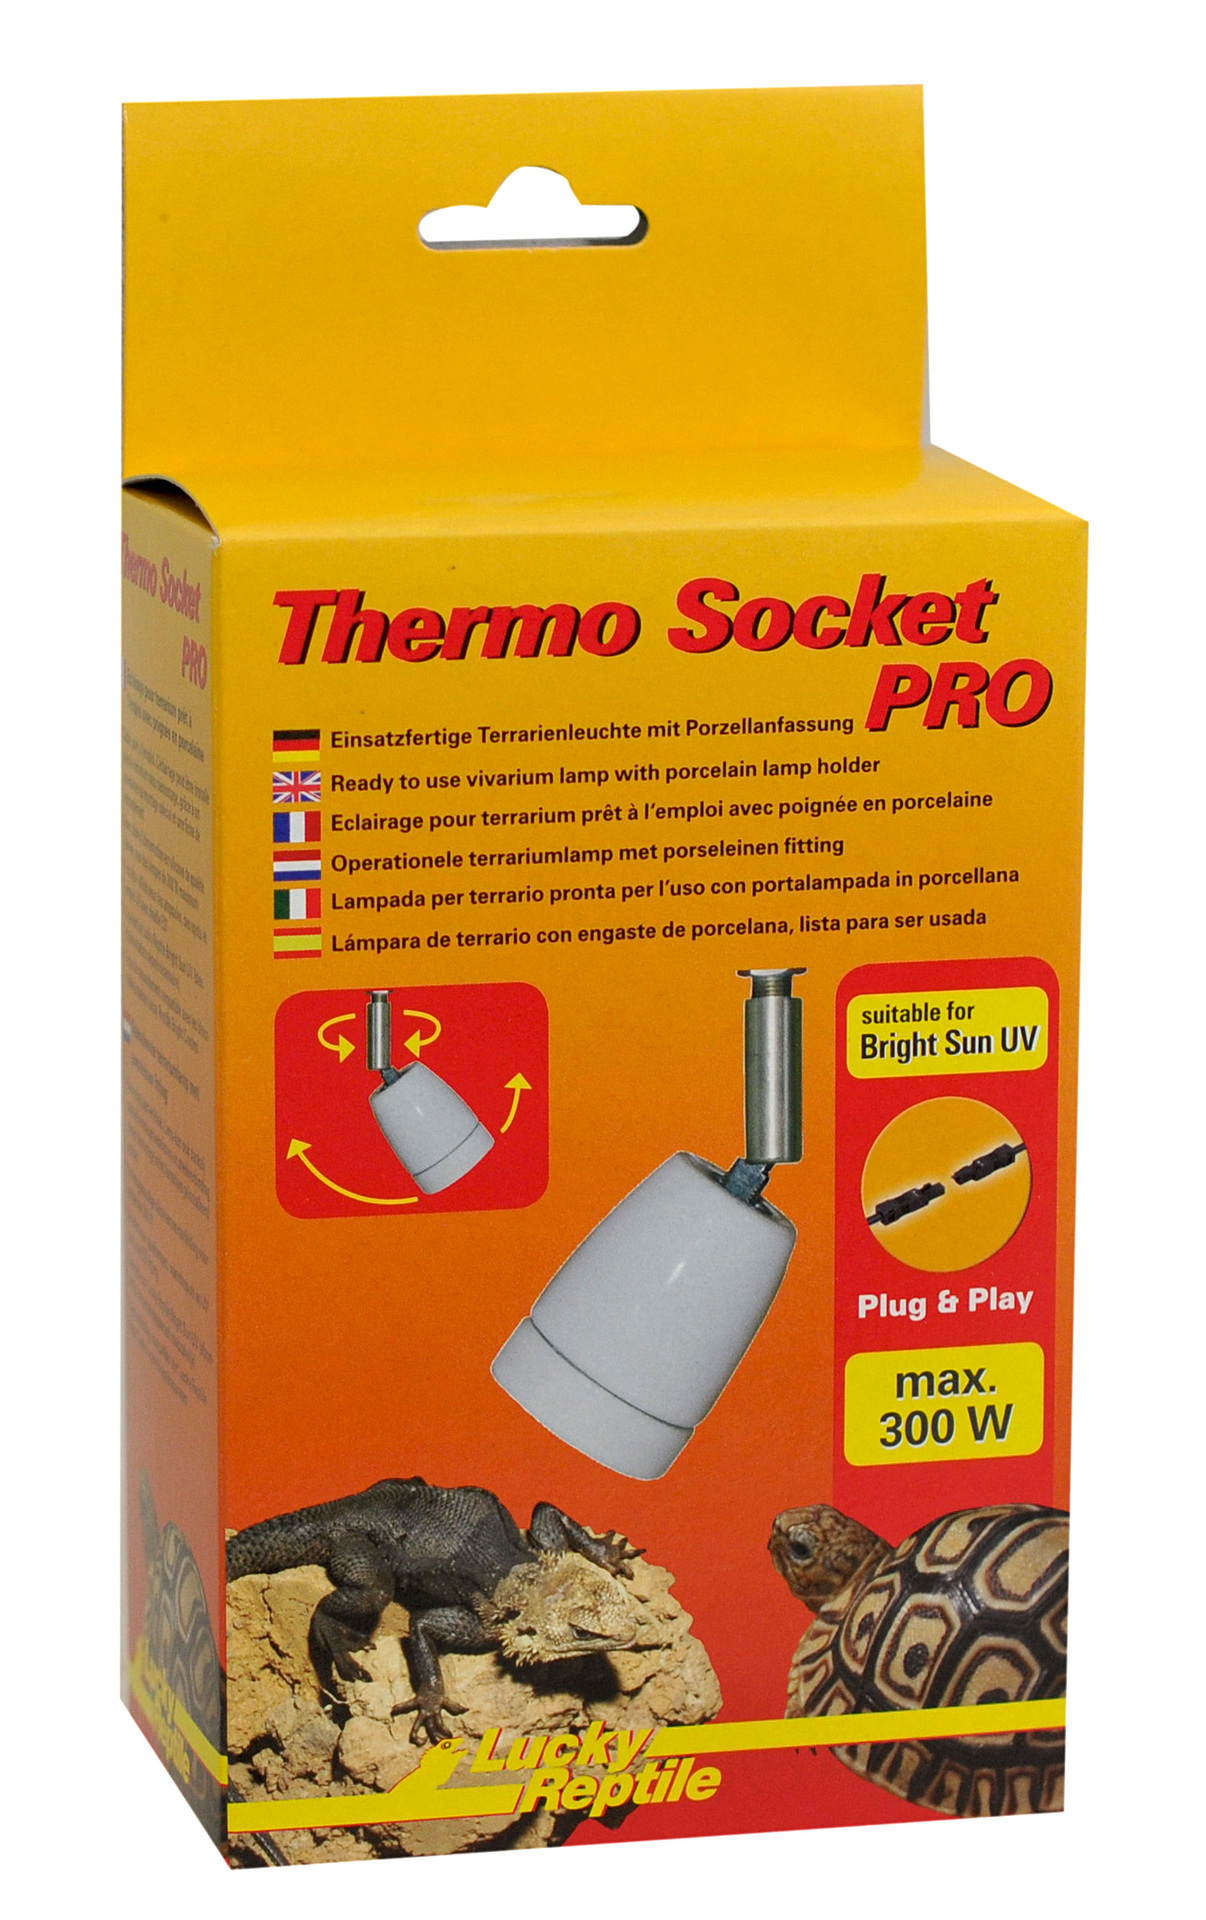 Peter Hoch Thermo Socket PRO – Porzellanfassung